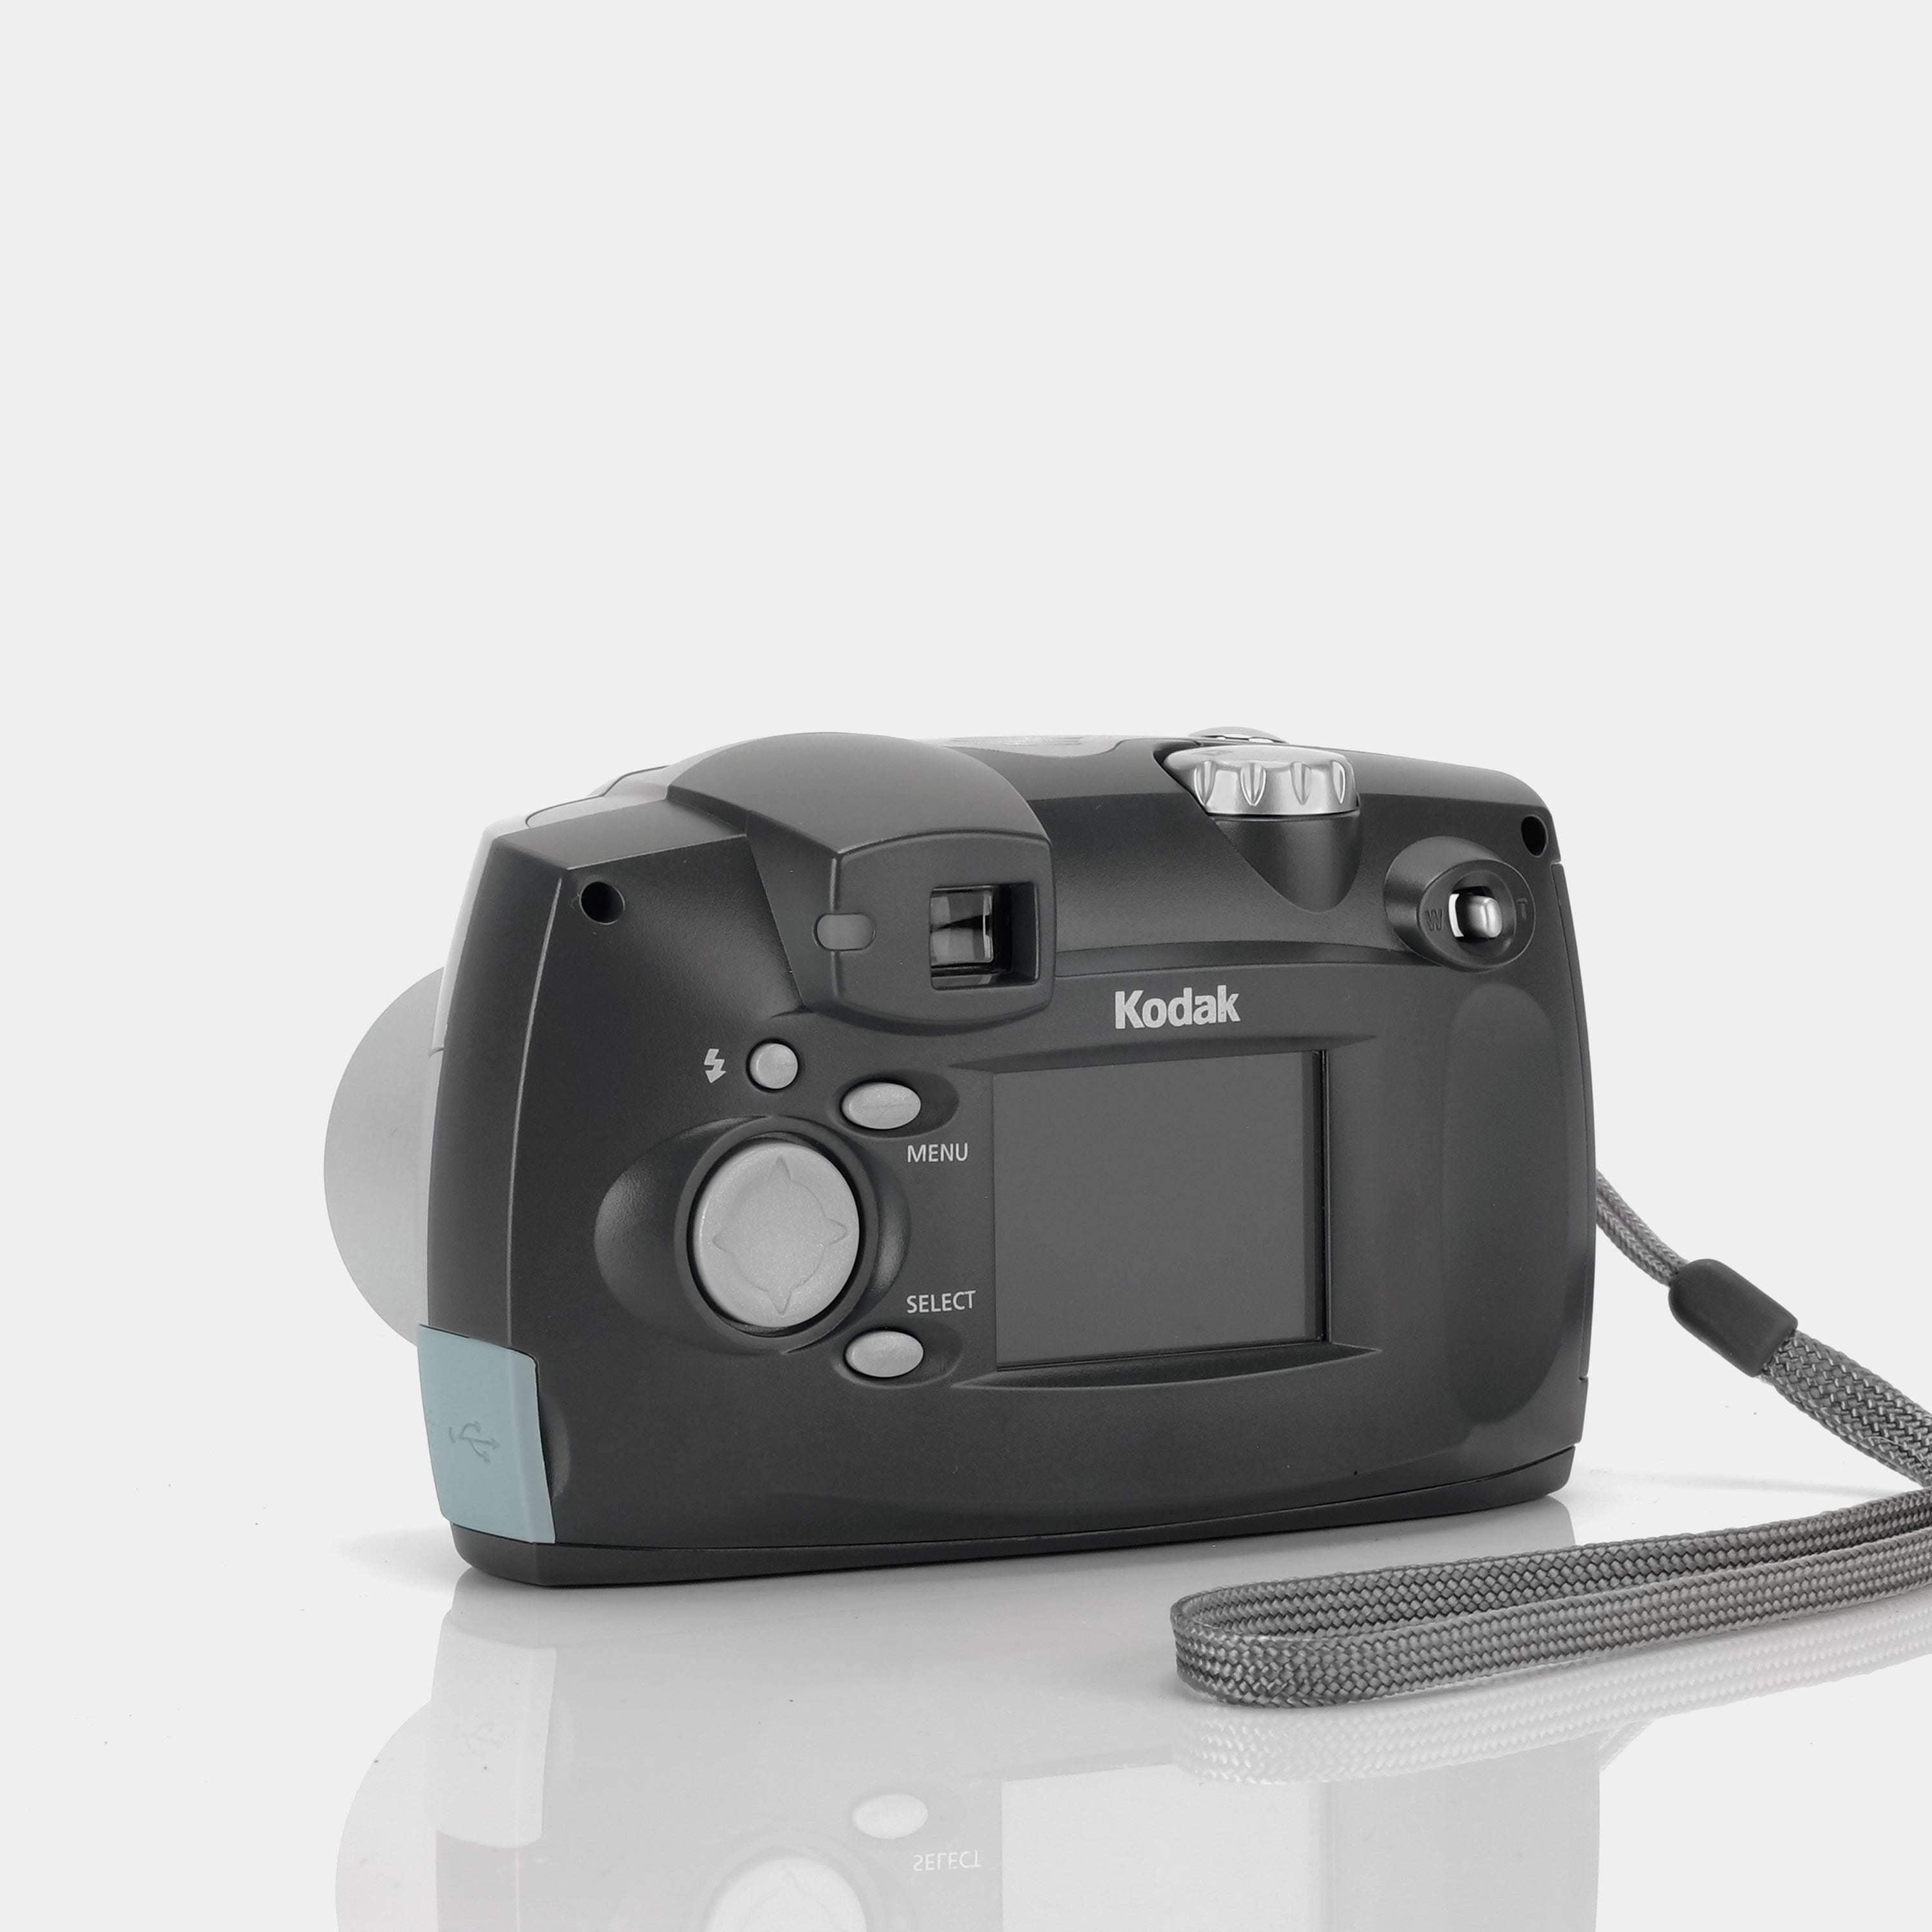 Kodak DX3600 Zoom Point and Shoot Digital Camera